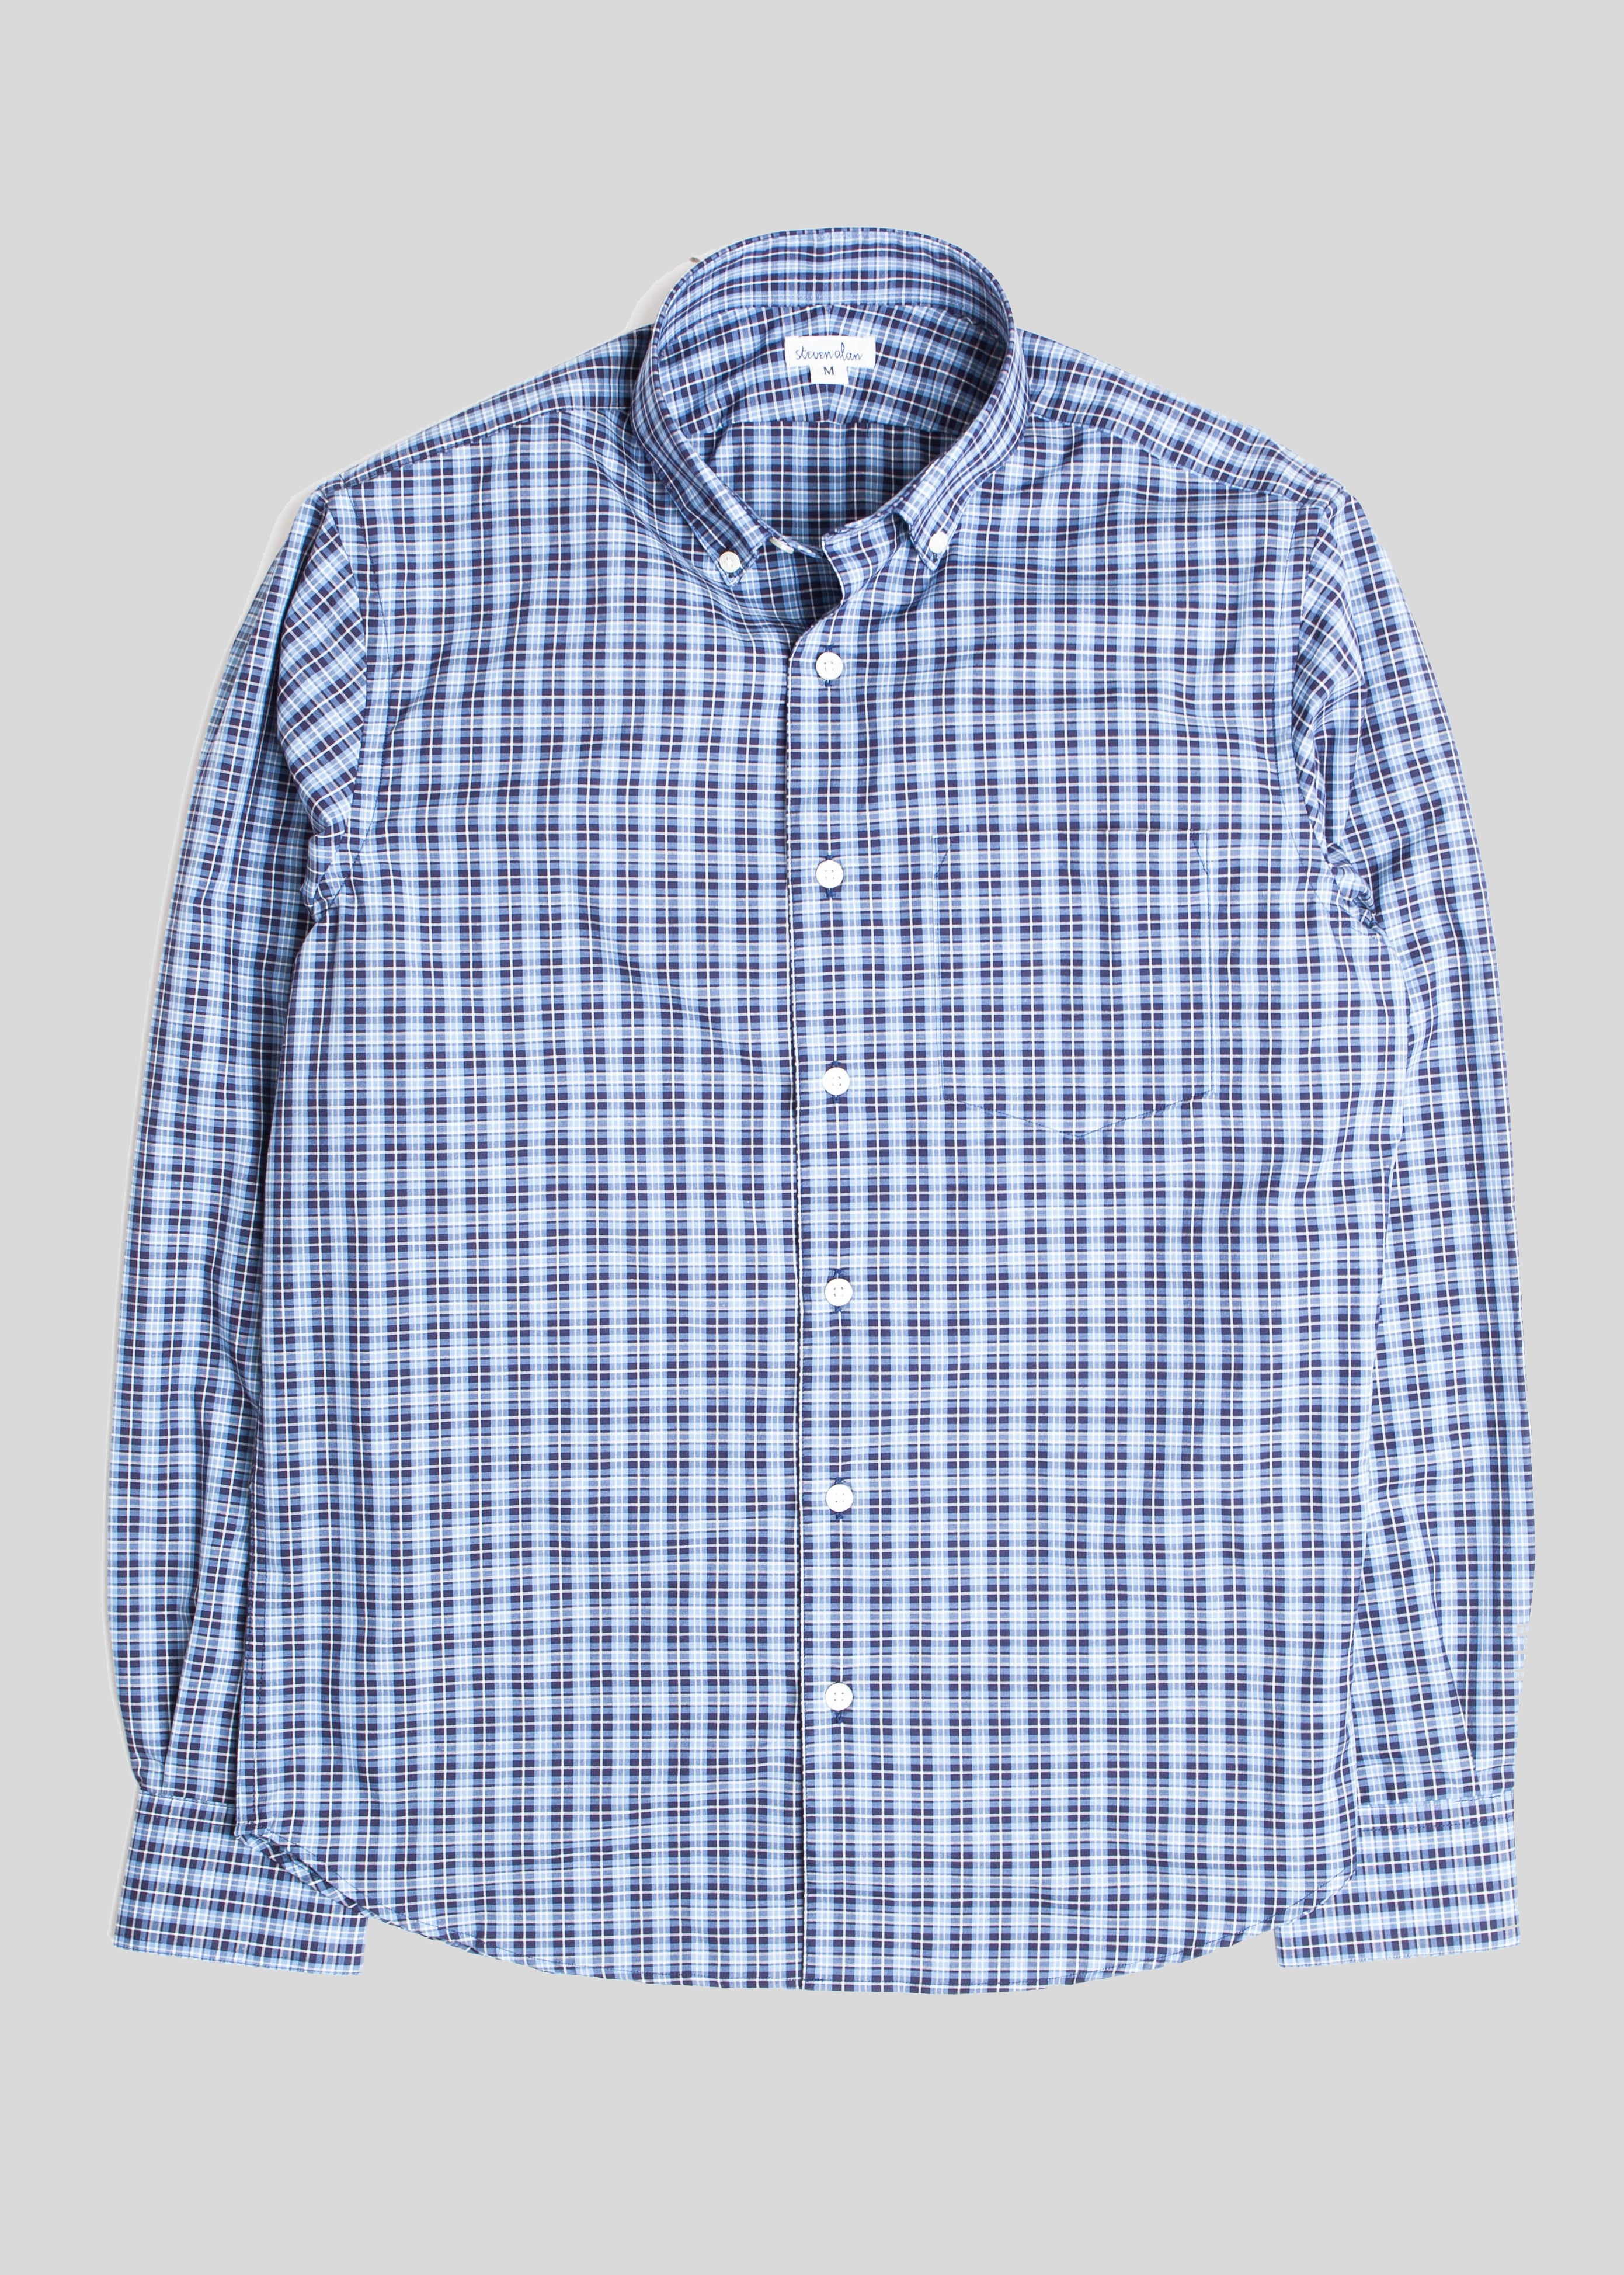 Image of Single Needle Shirt, Mixed Blue Tartan